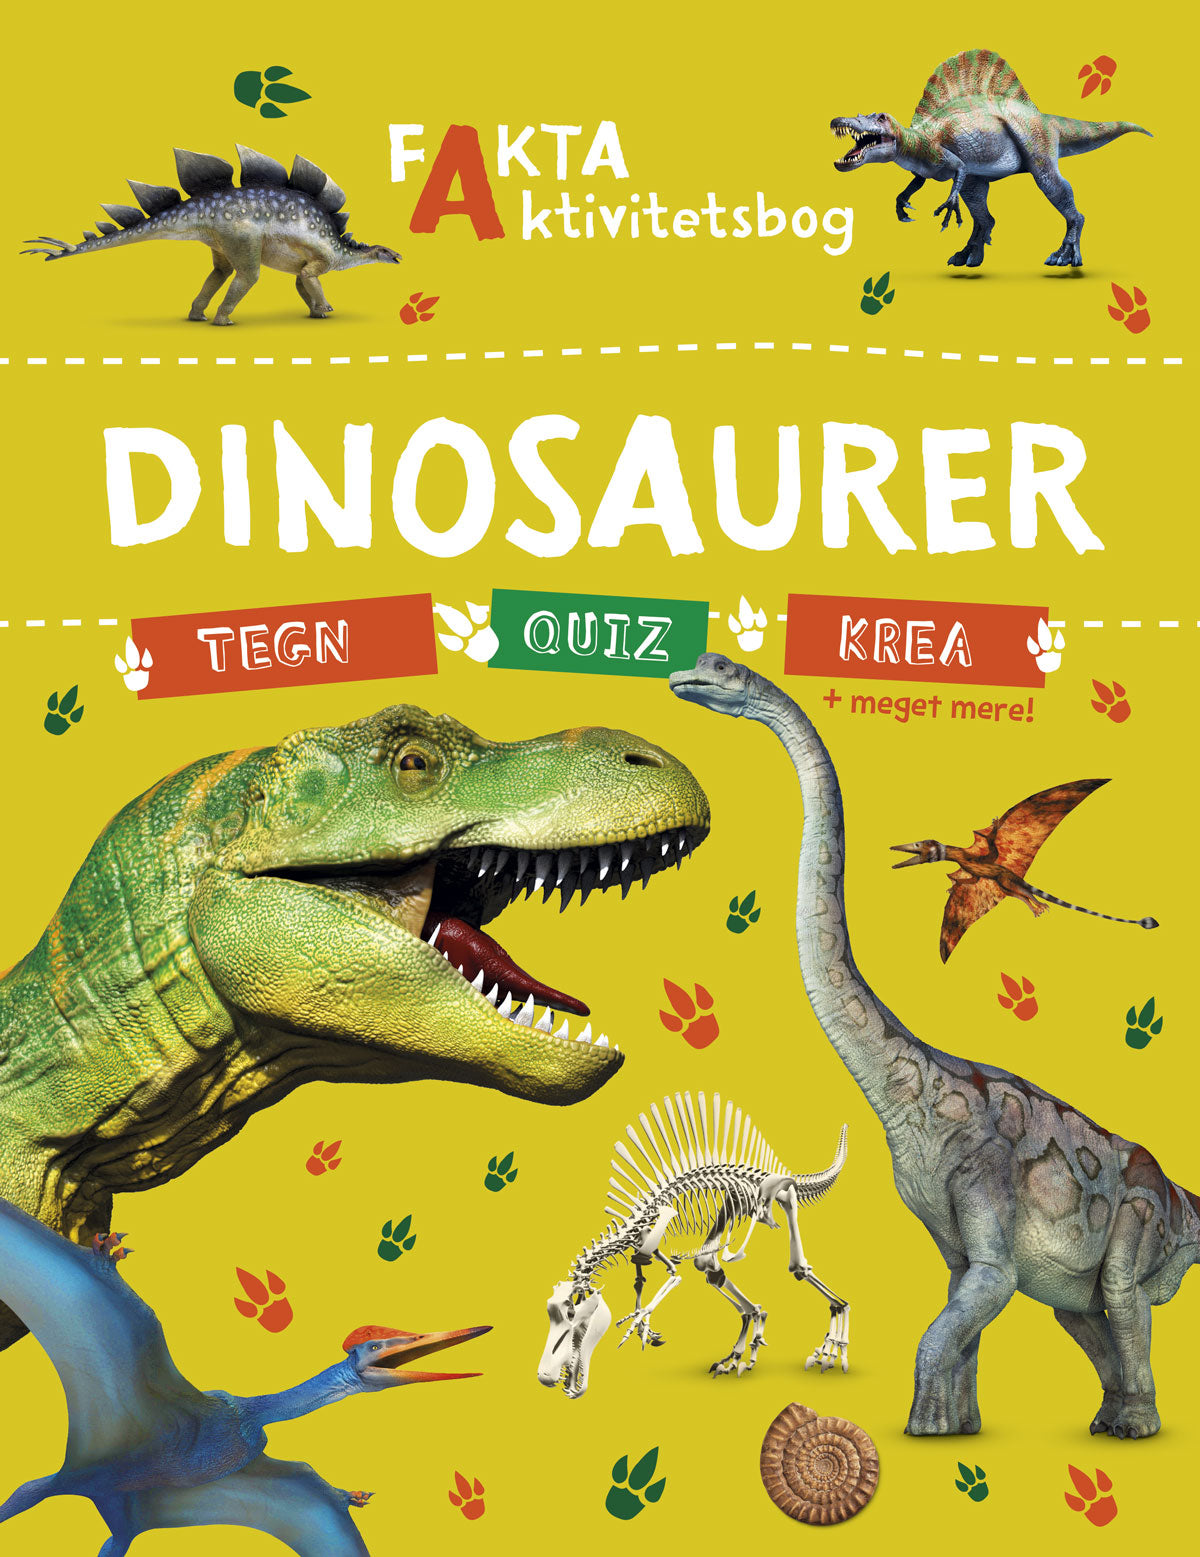 Fakta-aktivitetsbog: Dinosaurer